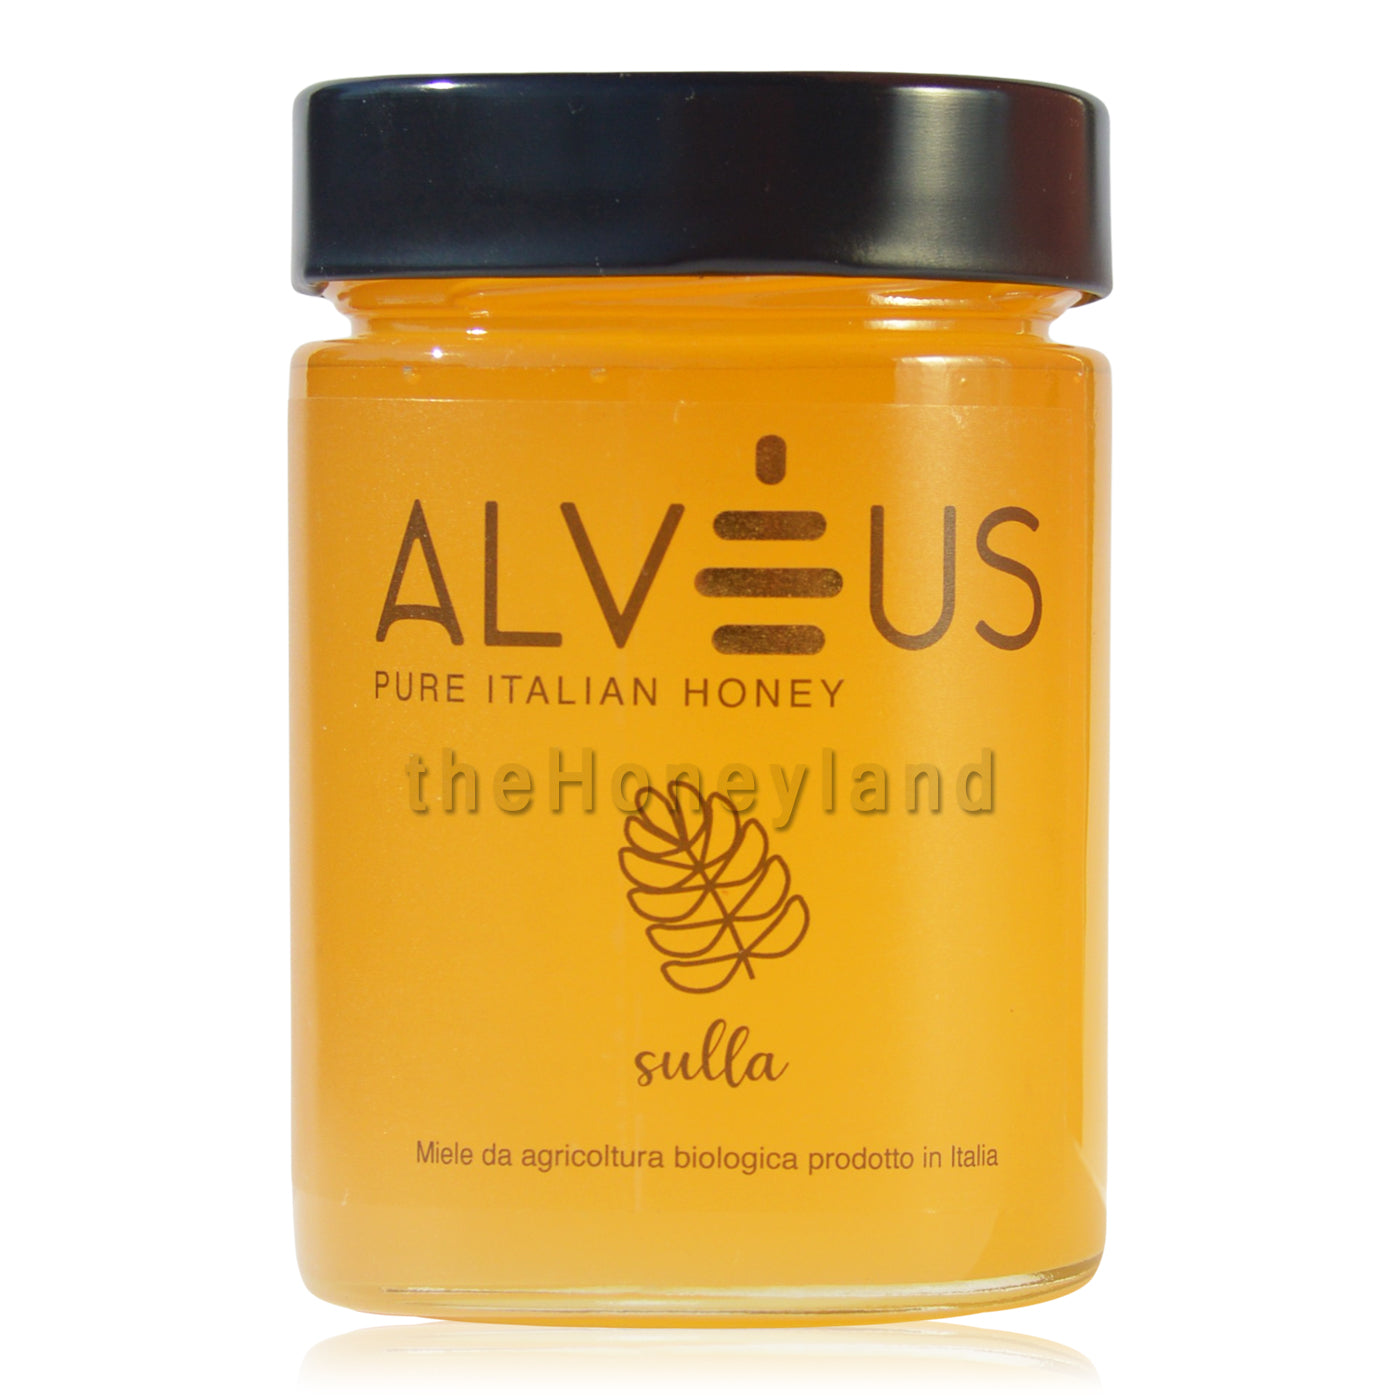 Sulla Honey from the Sinni Valley (Basilicata)